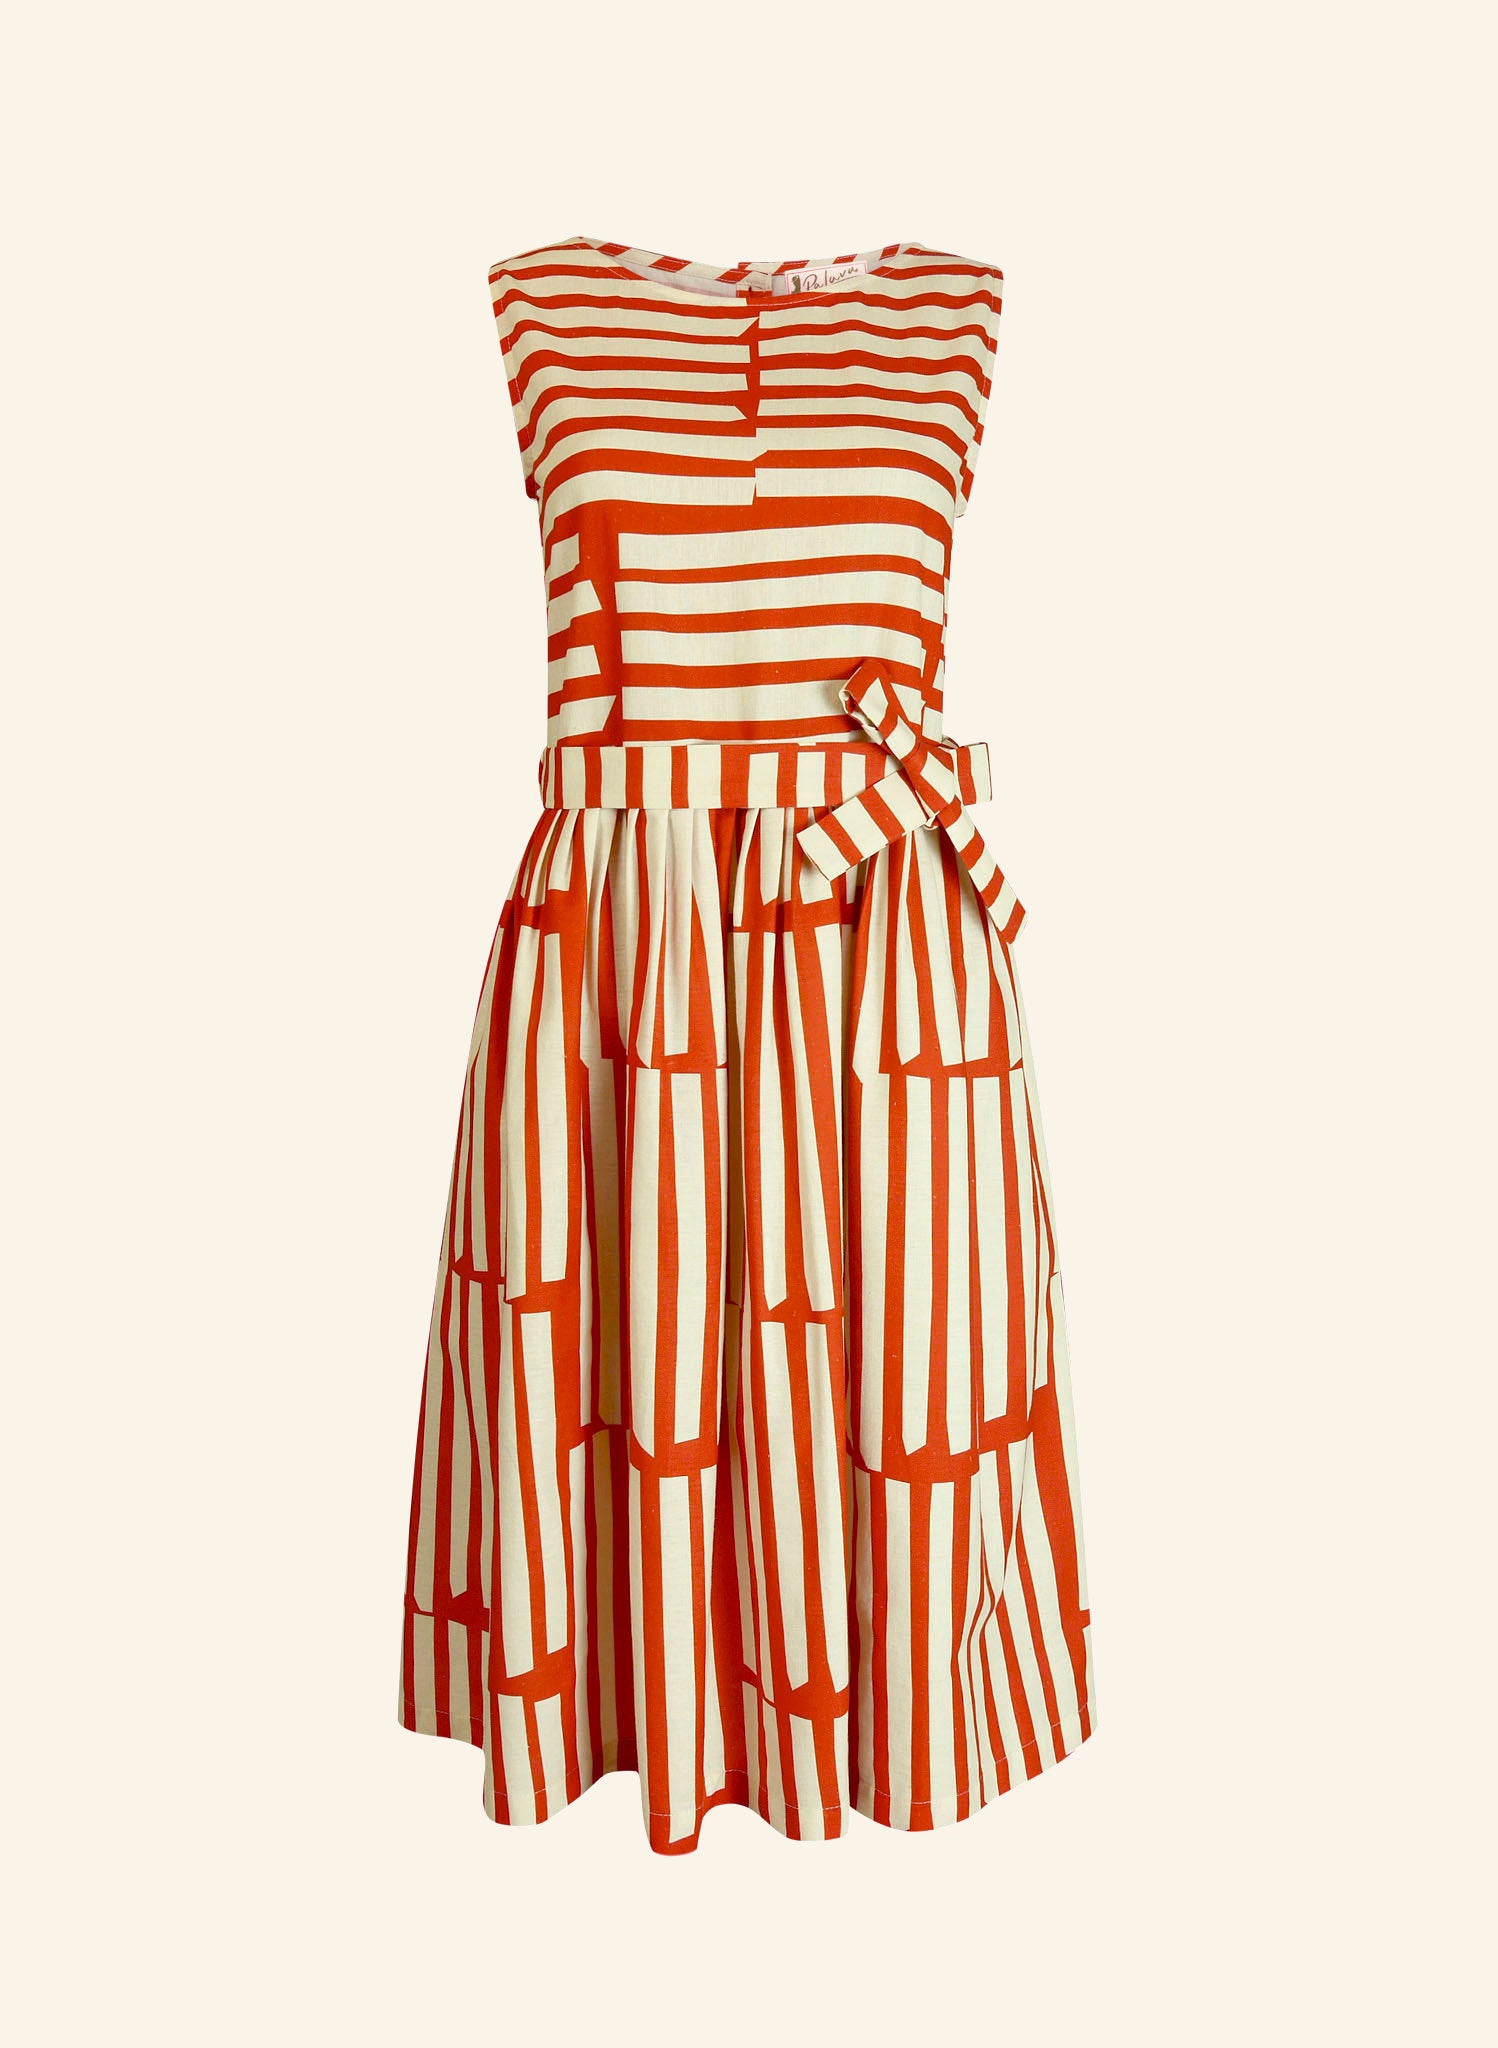 Mabel Dress - Red Box Stripe